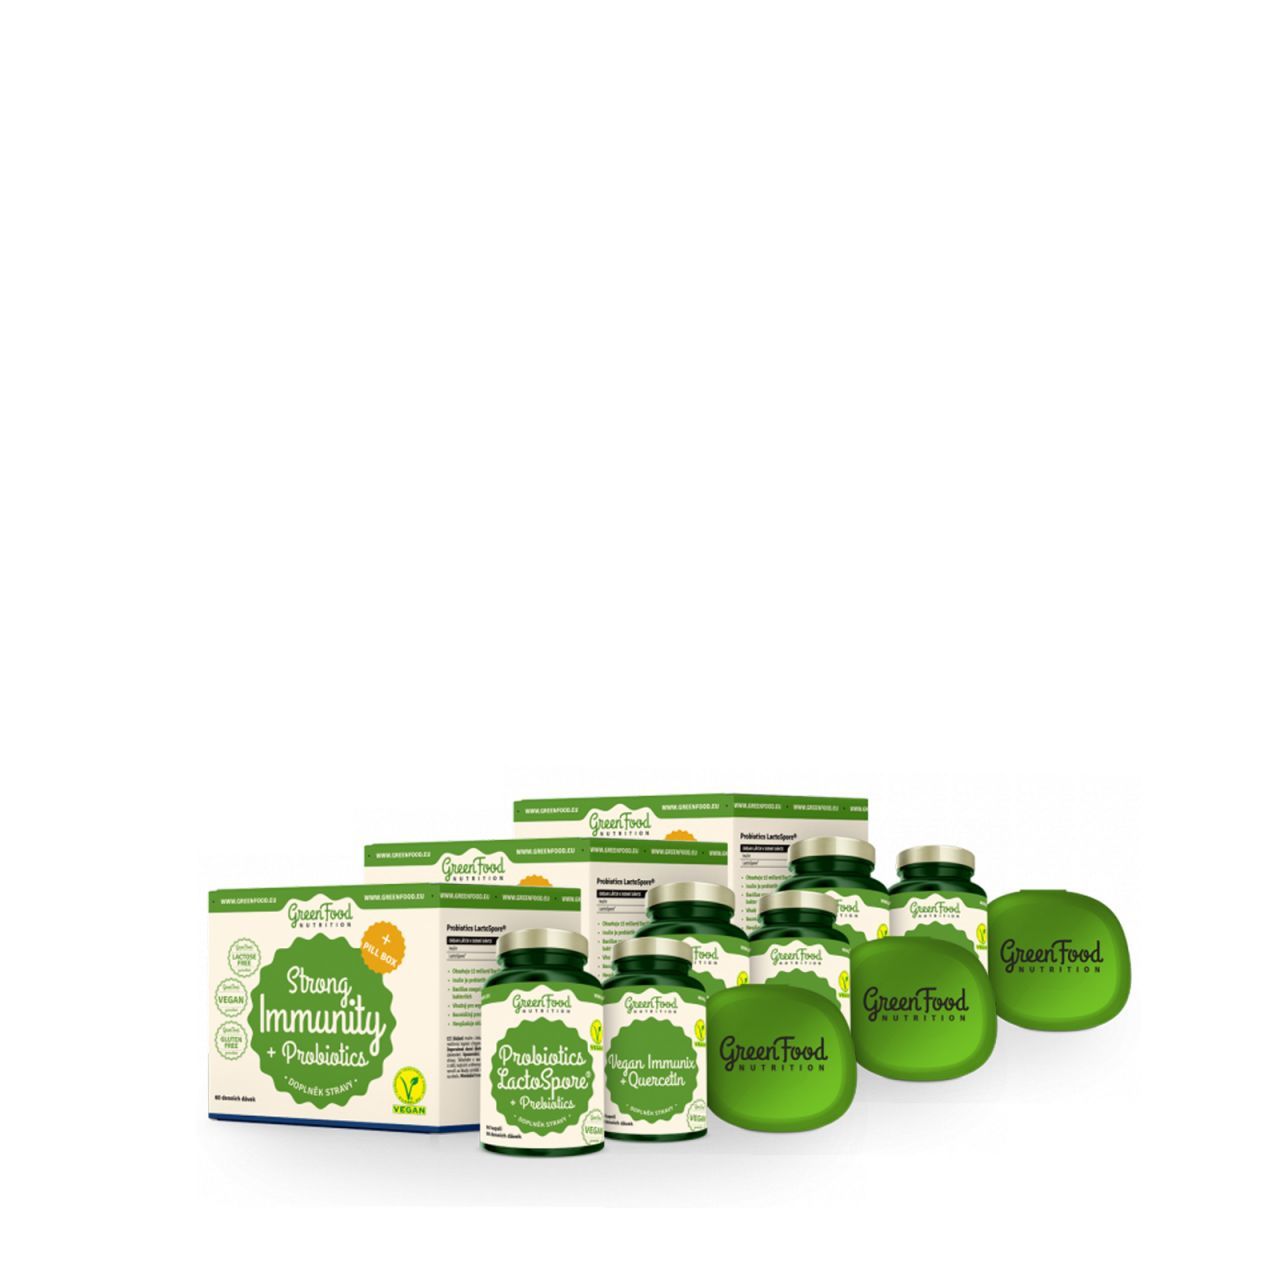 Erős immunrendszer csomag, GreenFood Nutrition Strong Immunity & Probiotics Box, 3 csomag